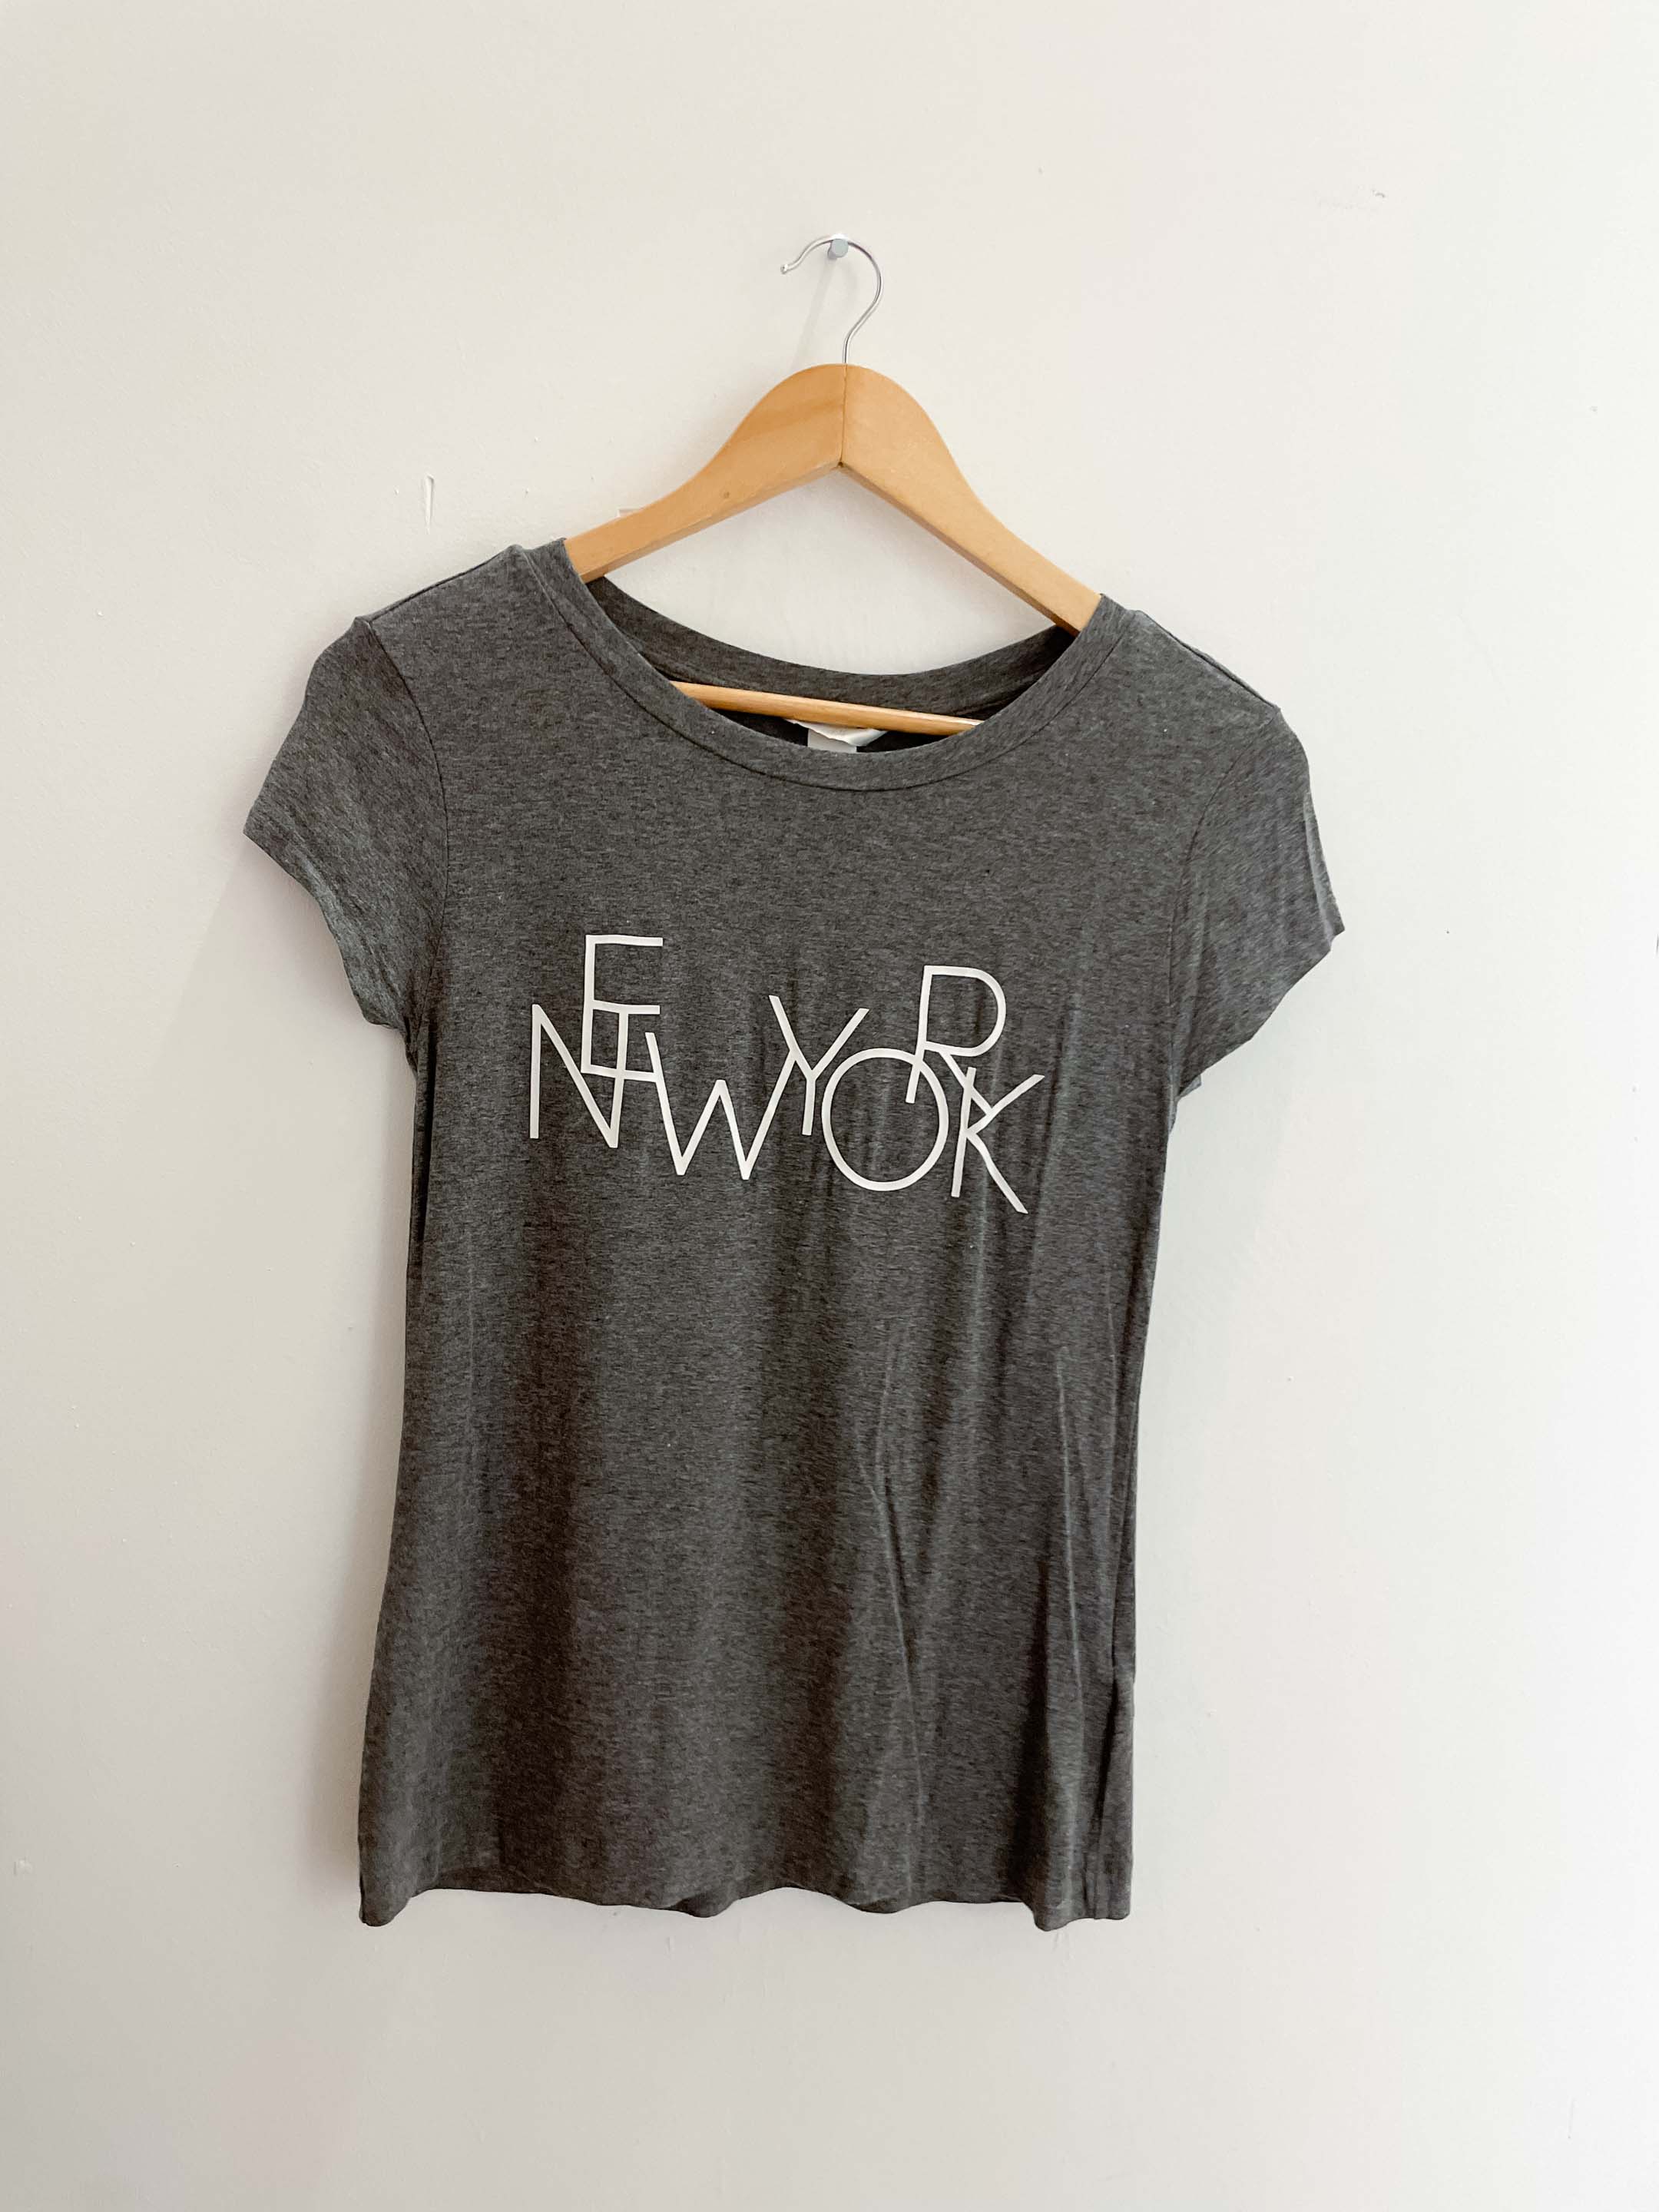 Vintage grey New york tshirt size XS